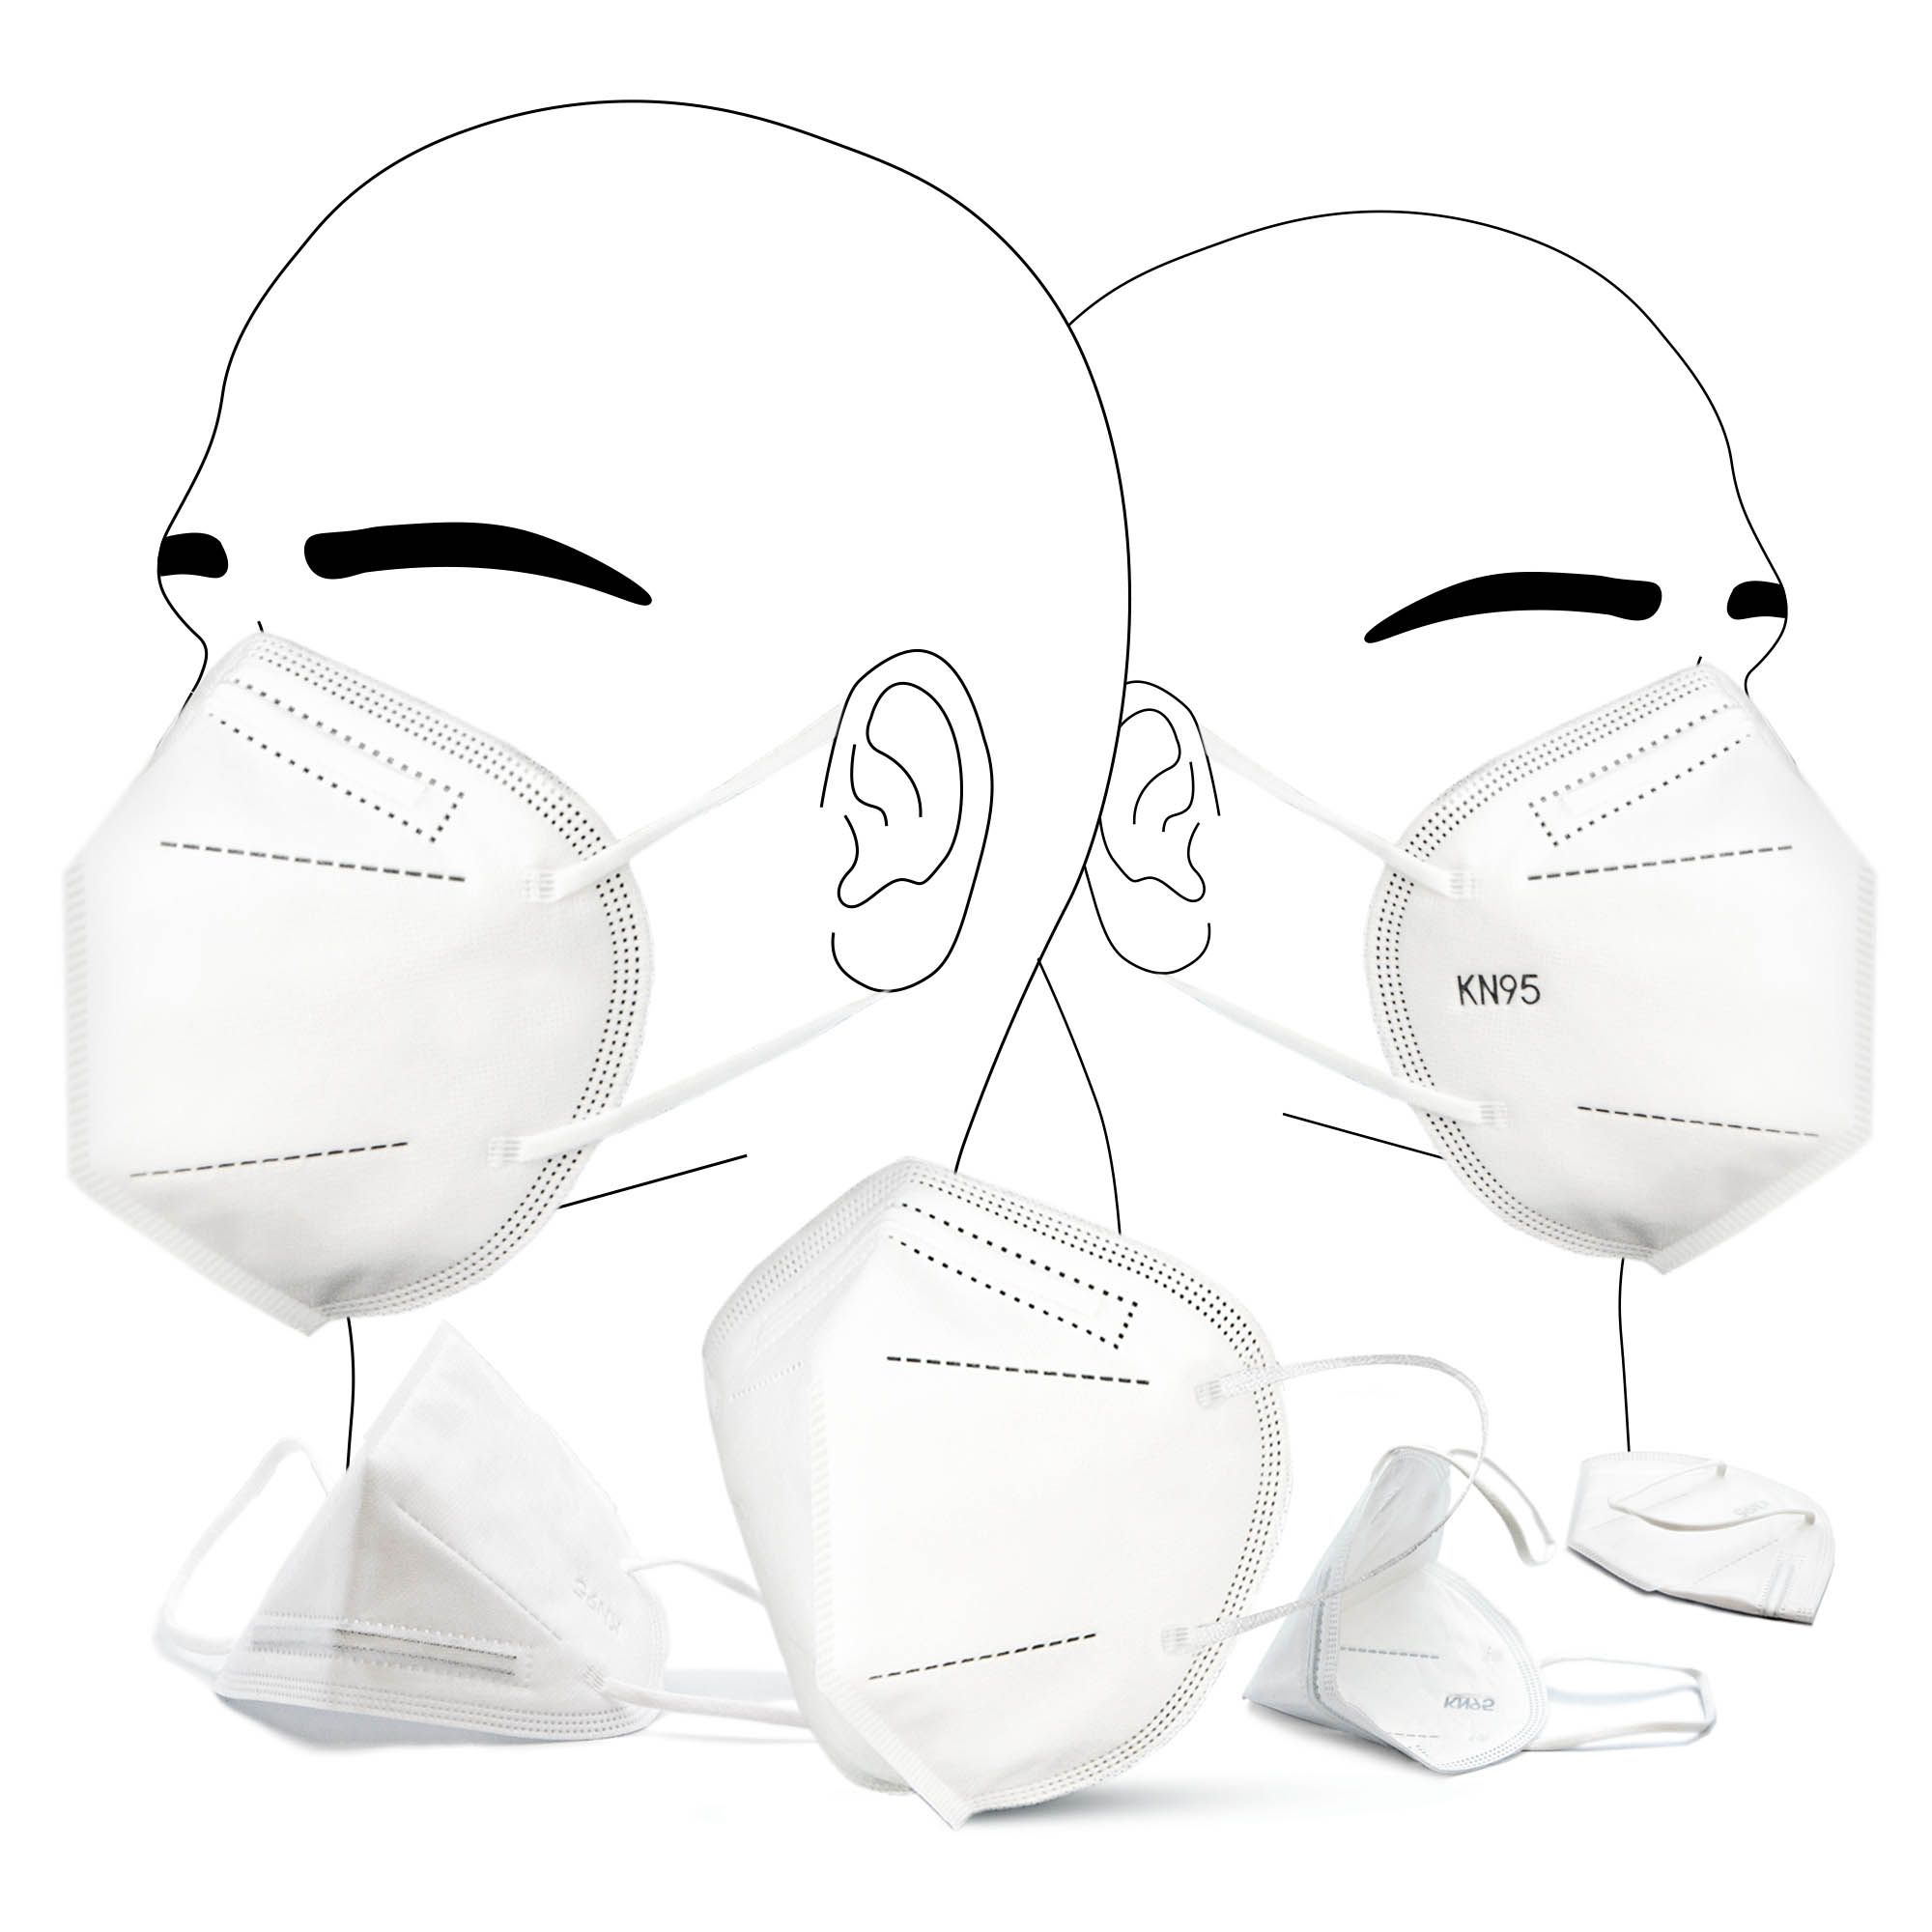 Kn95 - masque ffp2 - alsace protection - lot de 10 masques_0